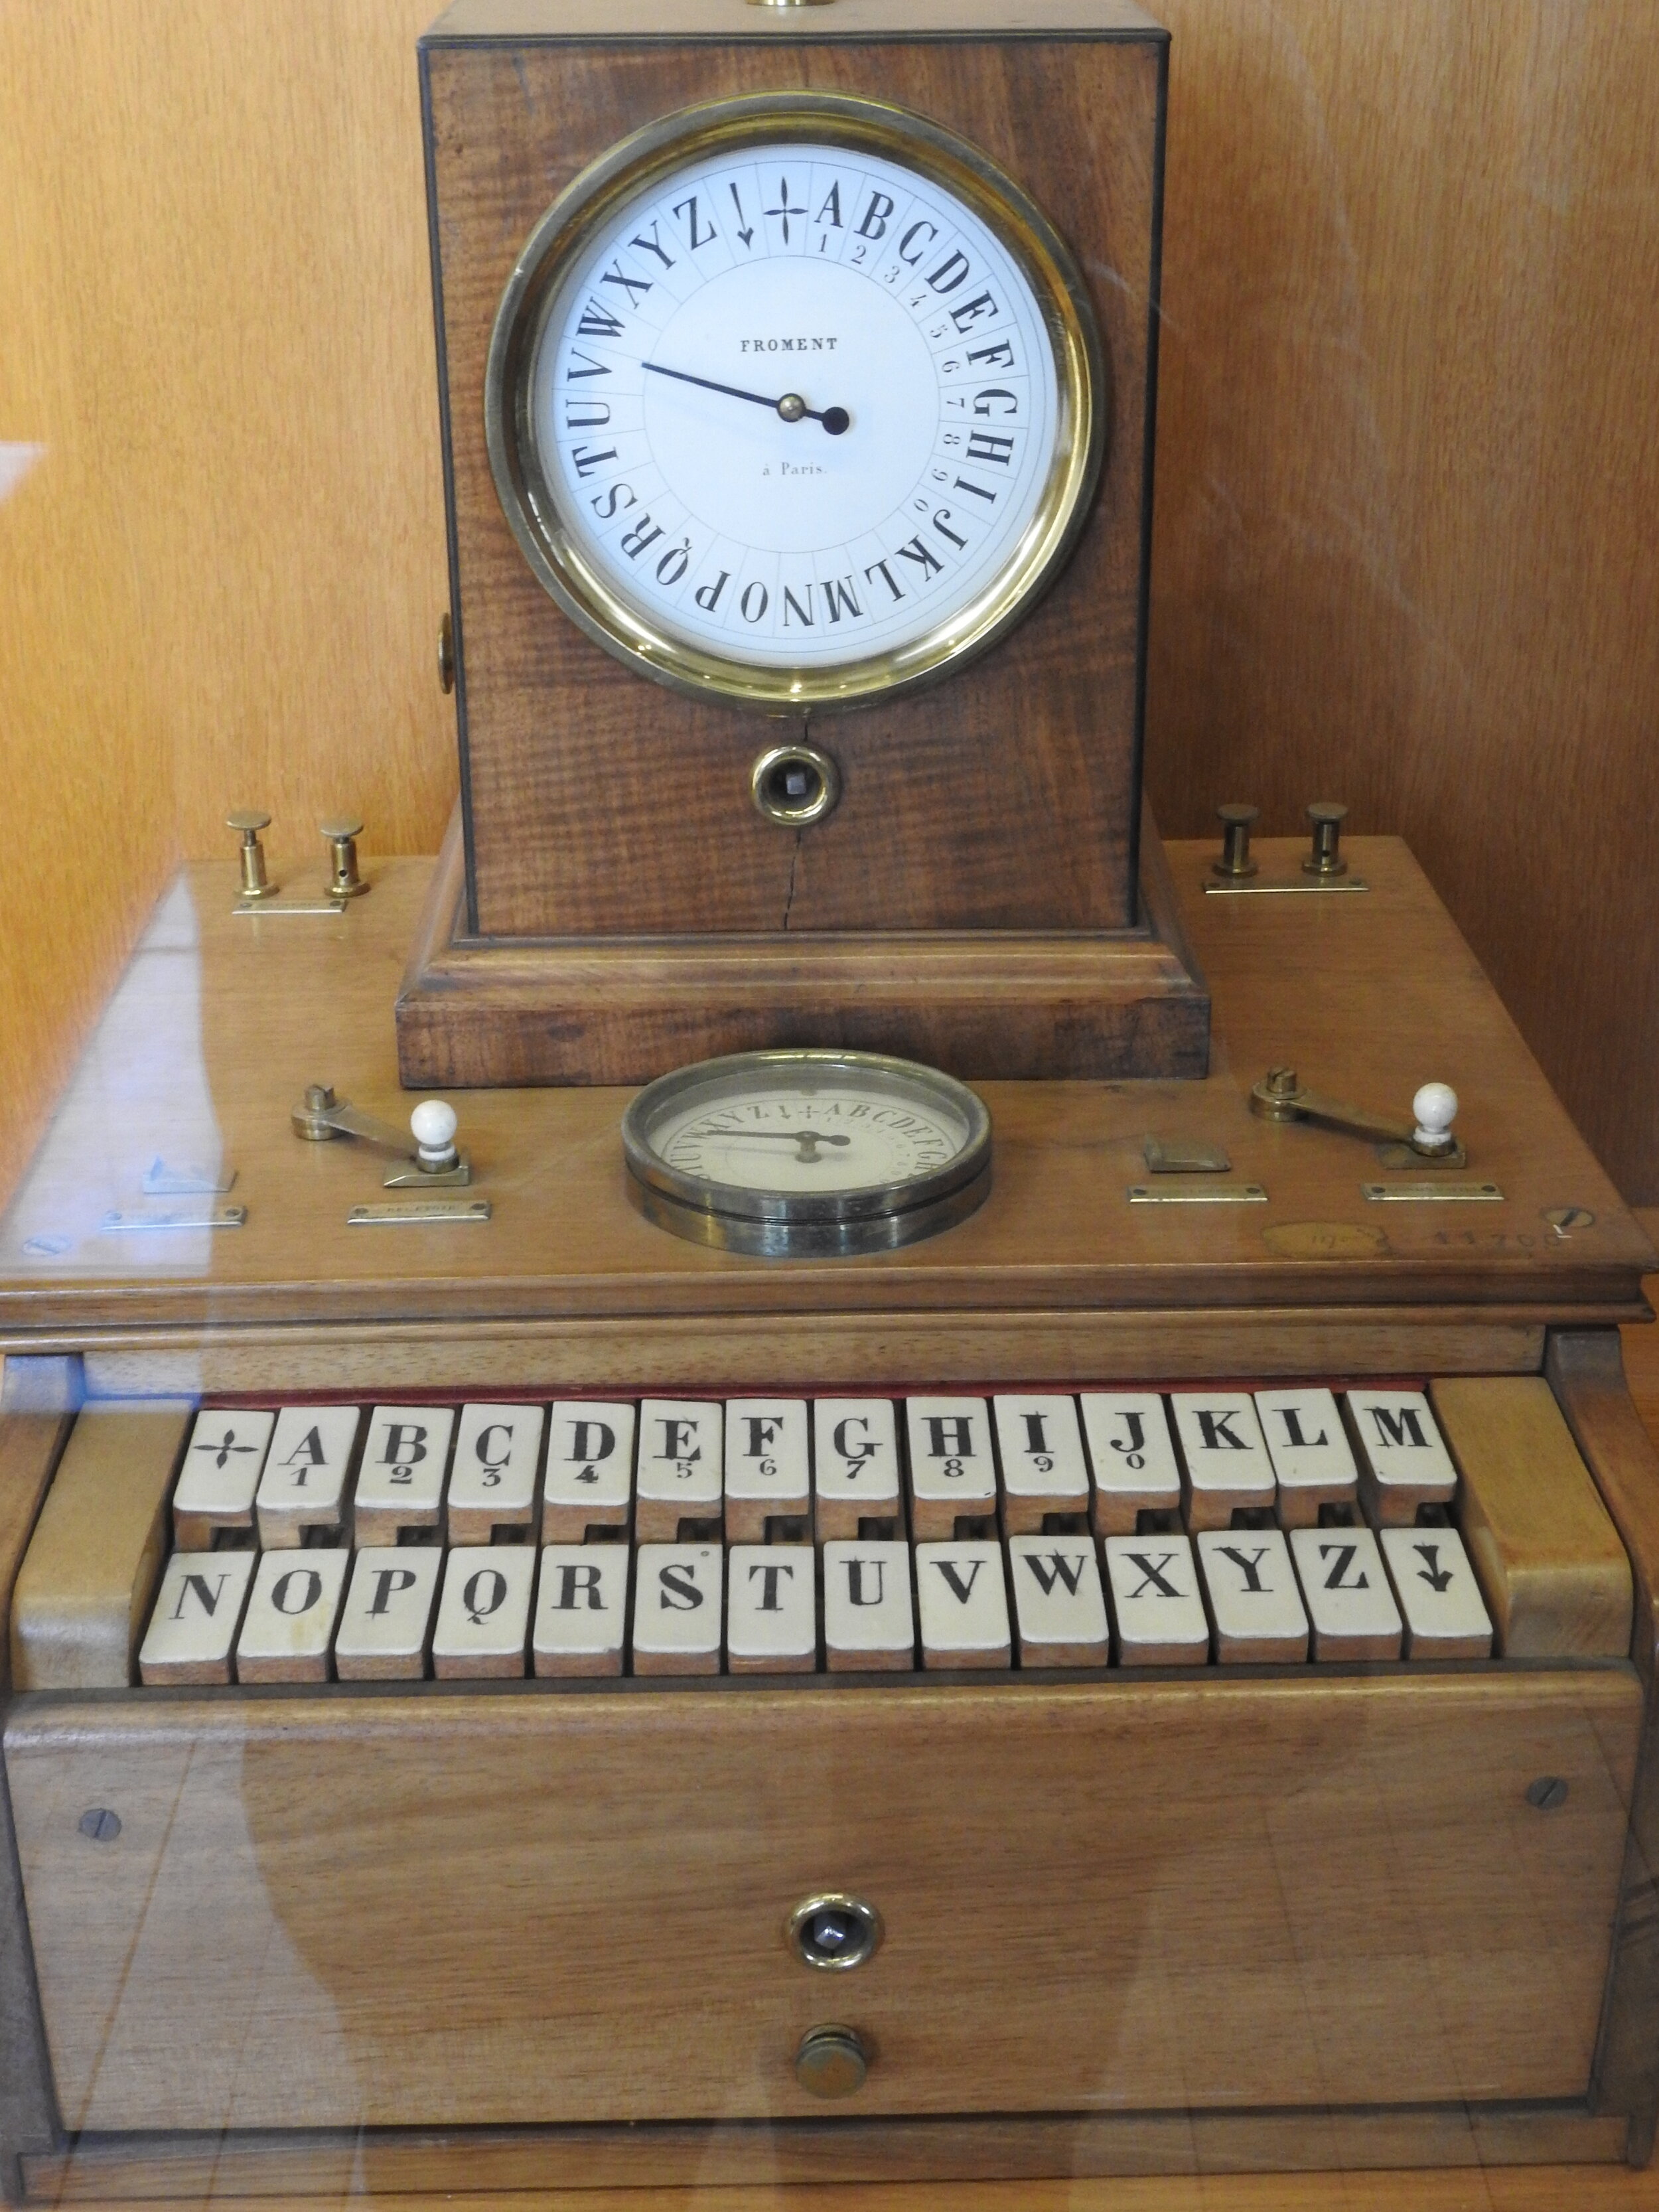 An early teleprinter